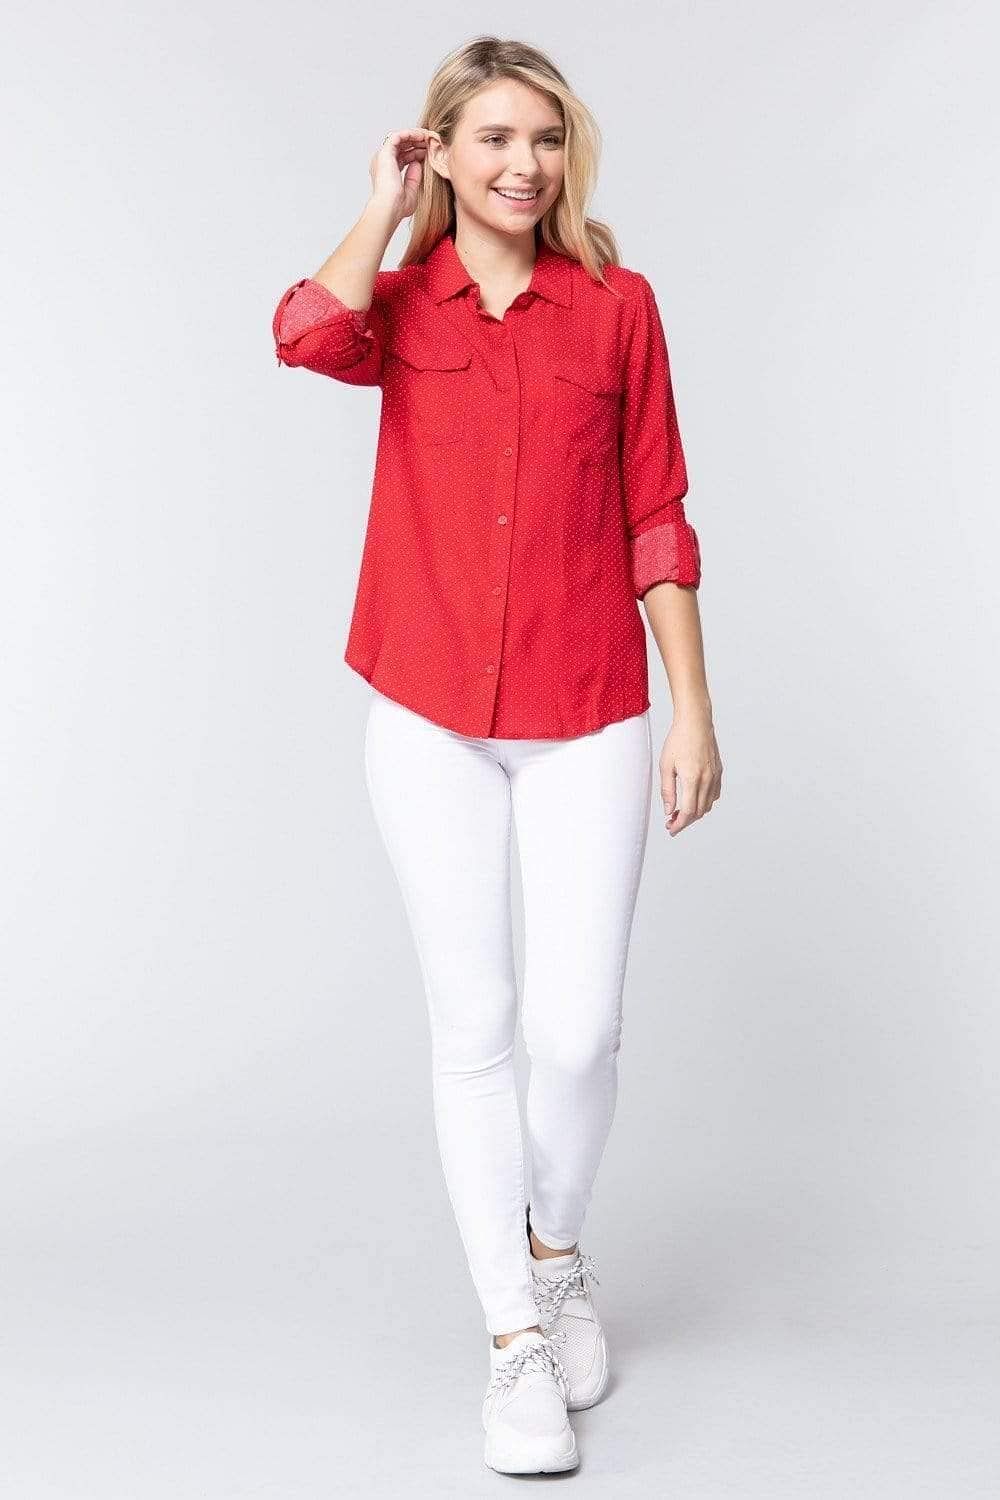 Red Roll Up Sleeve Polka Dot Shirt - Shopping Therapy, LLC Shirt